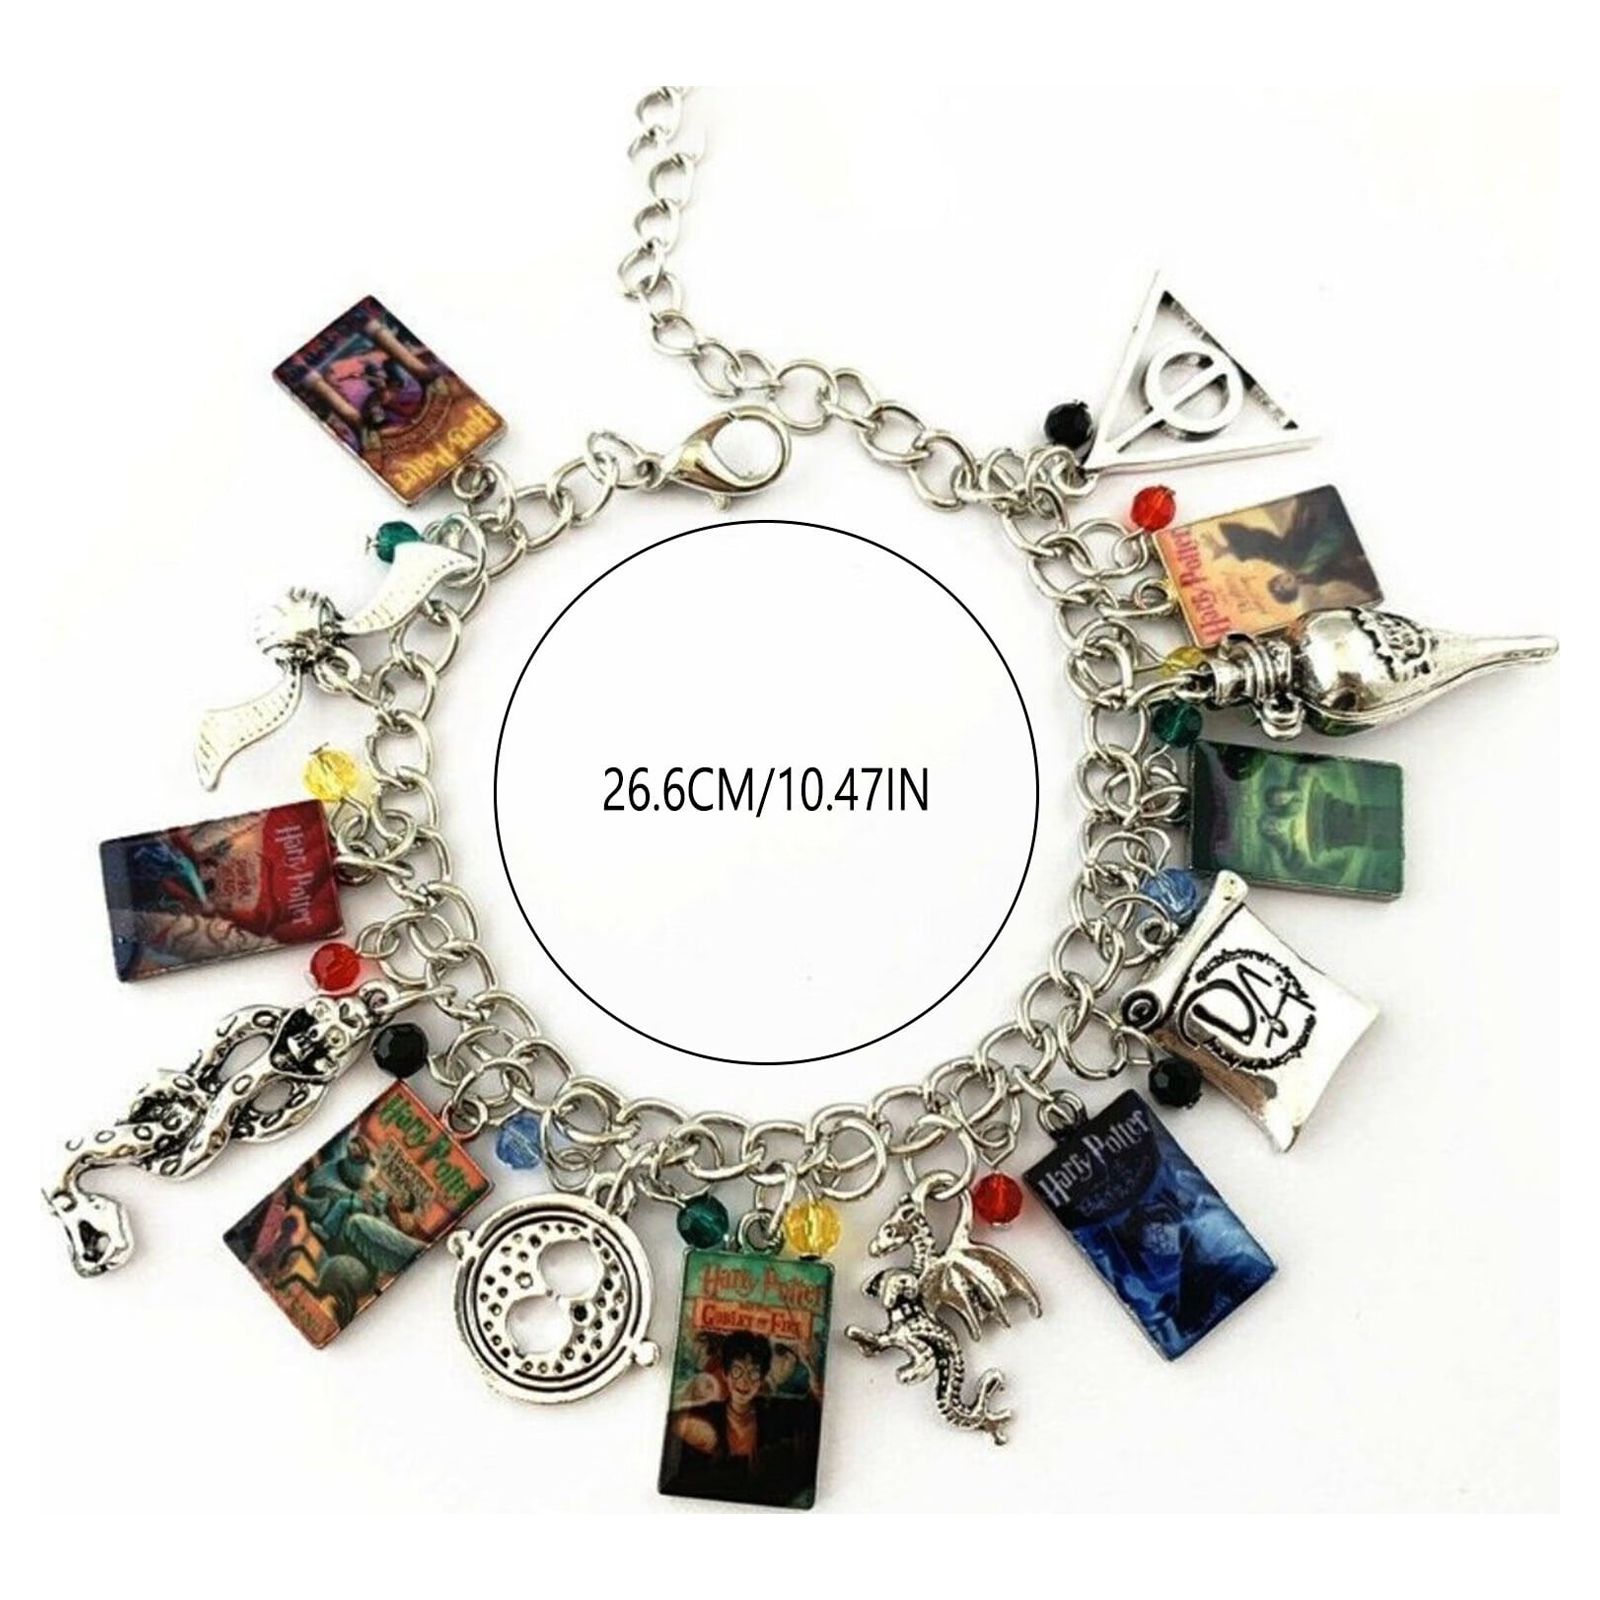 Harry Potter Books and Logo Charm Metal Novelty Charm Bracelet - image 3 of 3